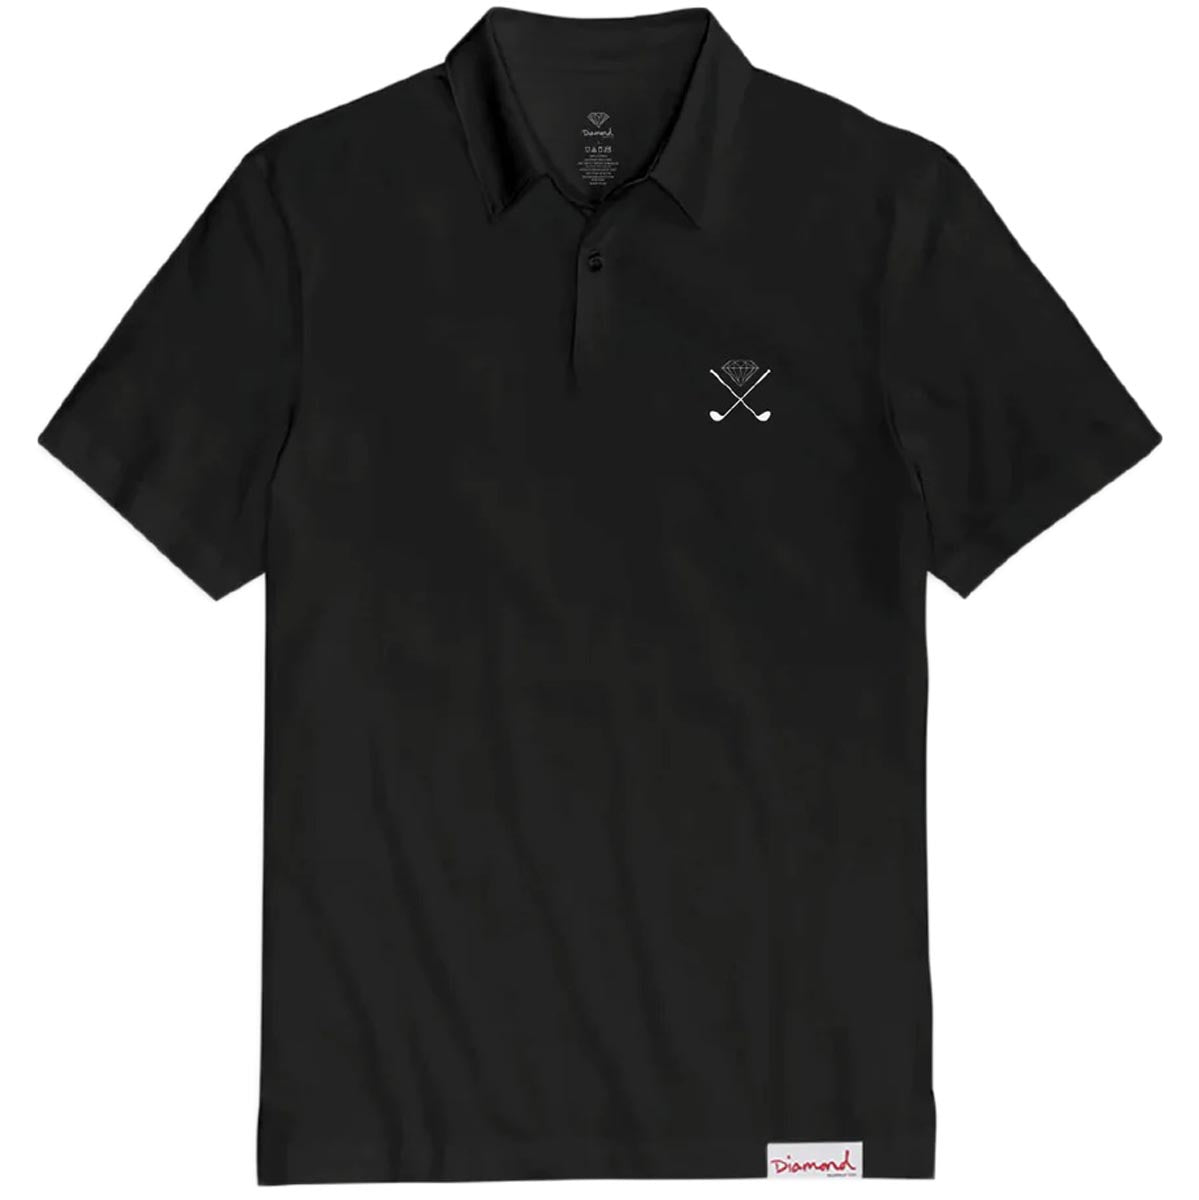 Diamond Supply Co. Golf Polo T-Shirt - Black image 1